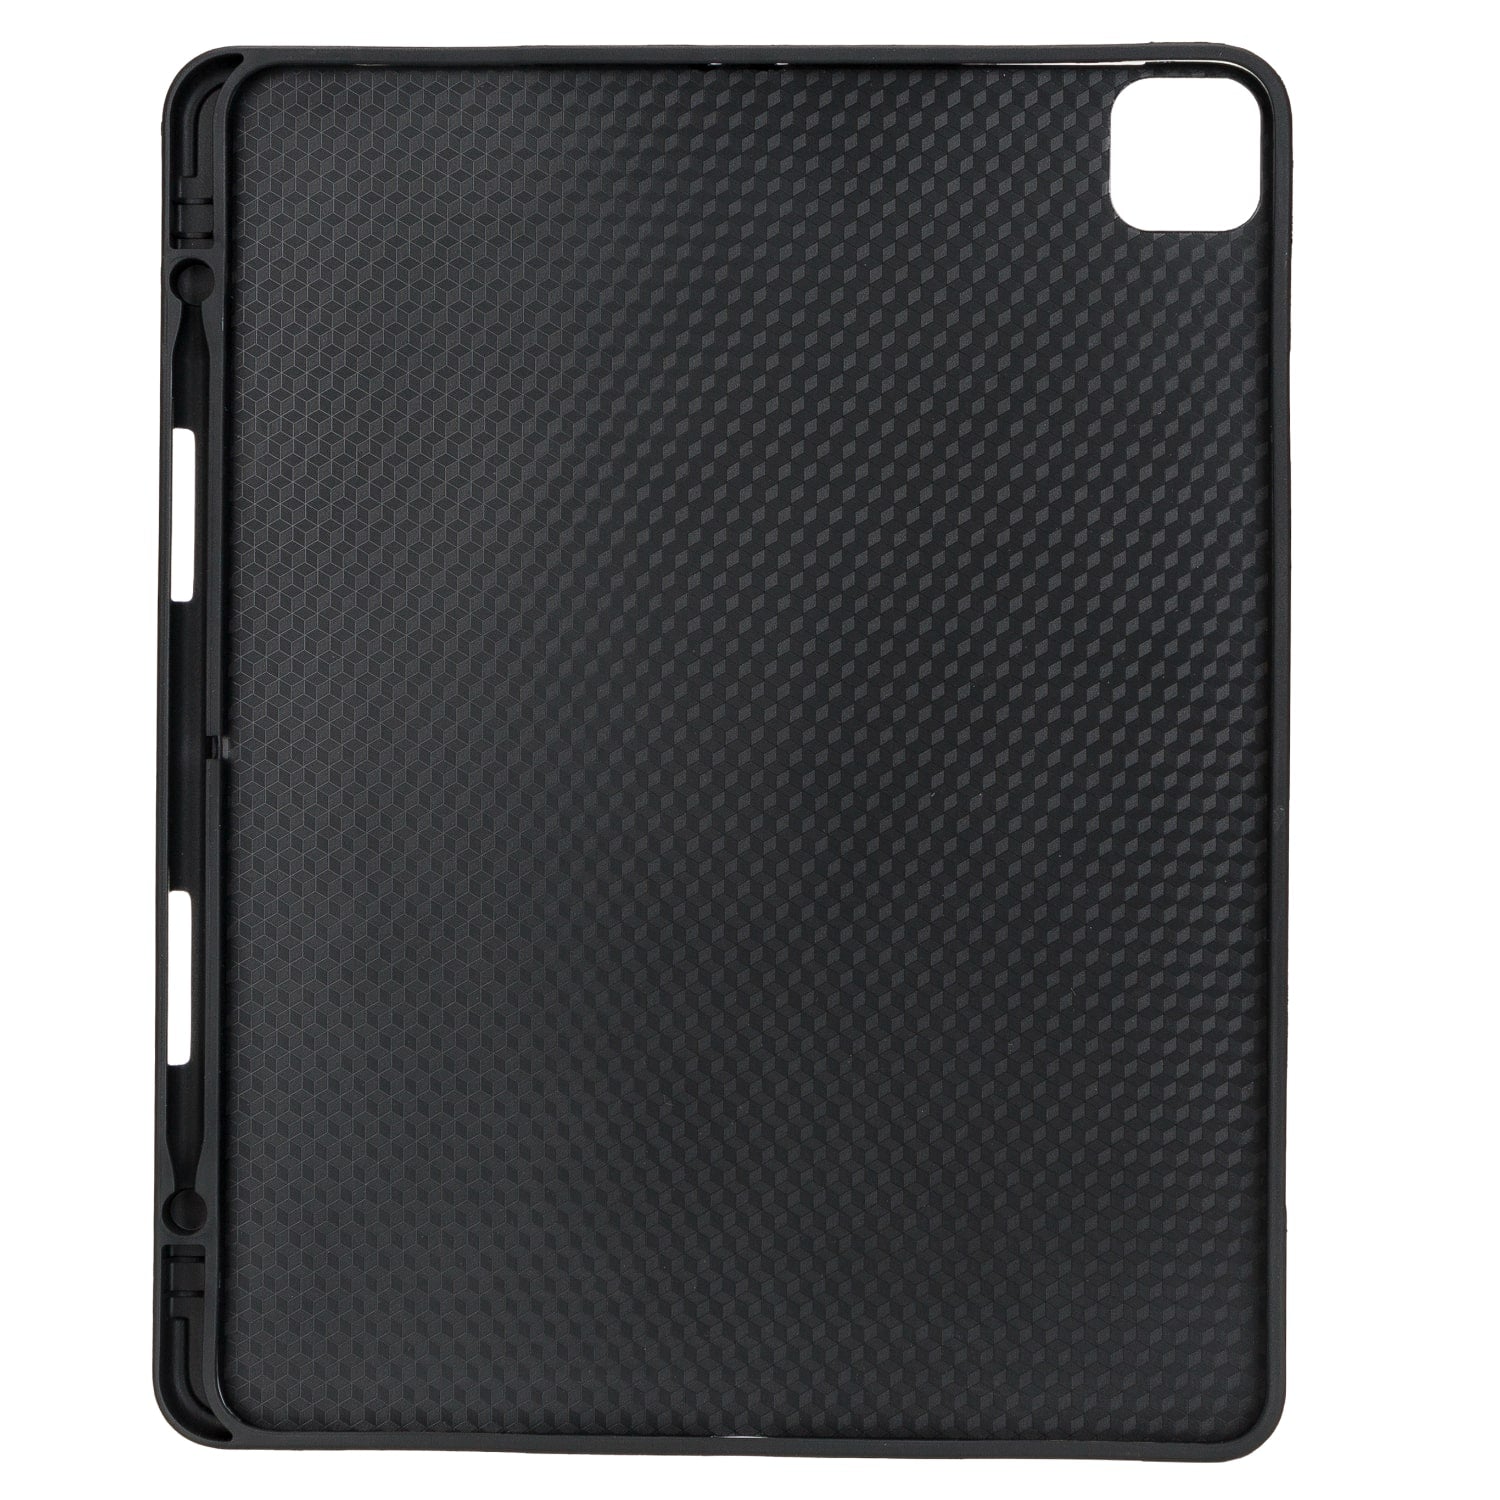 Black Leather iPad Pro 12.9 Inc Smart Folio Case with Apple Pen Holder - Bomonti - 6